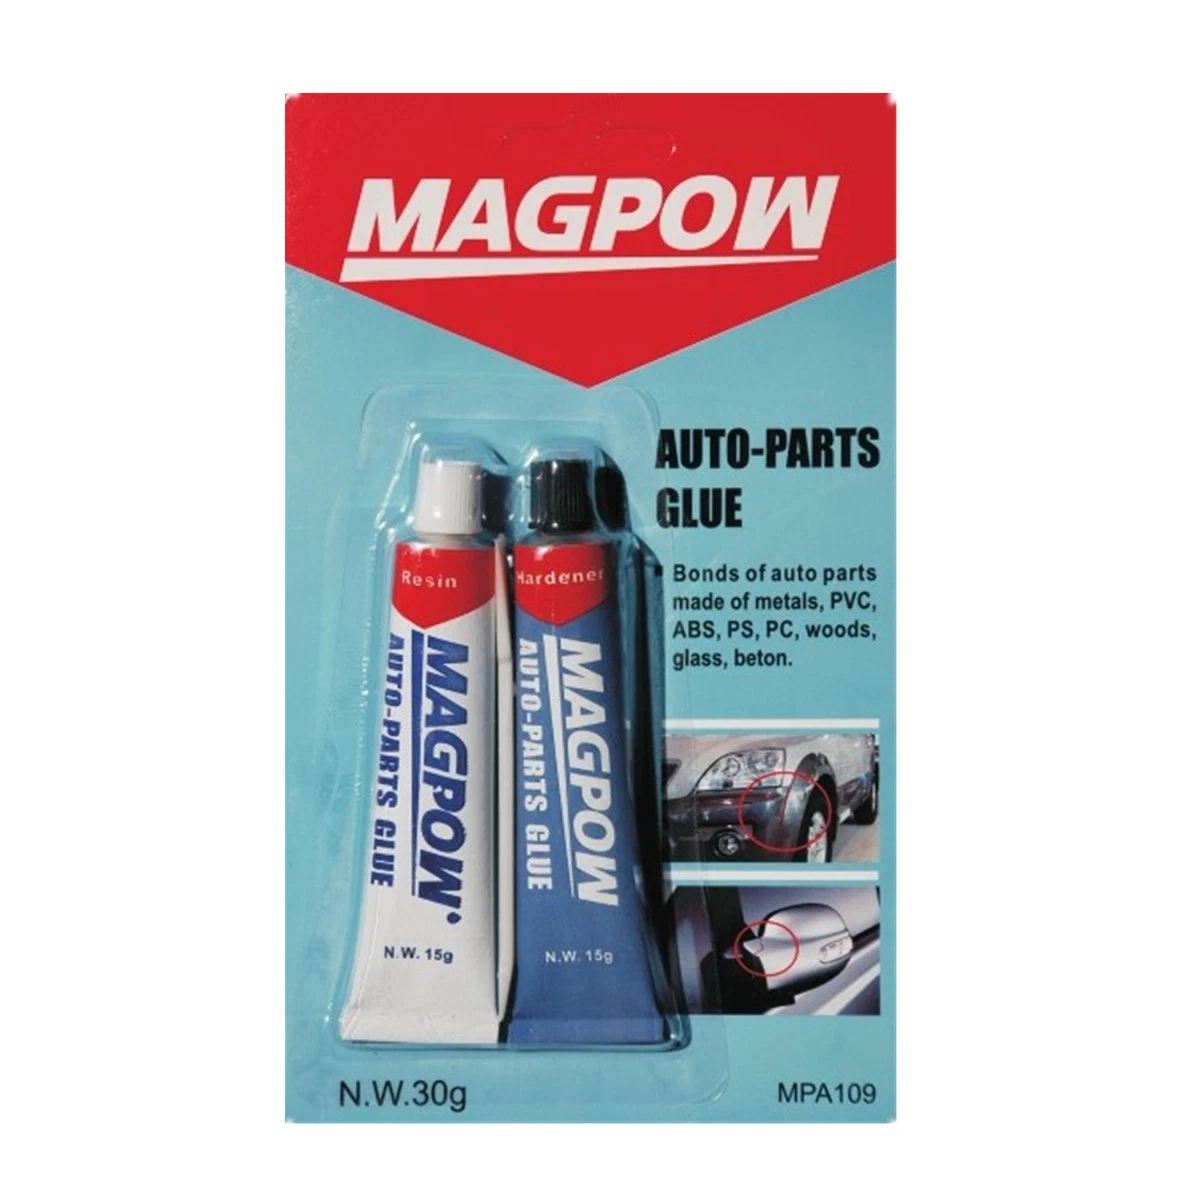 Magpow Ab Gum Epoxy Steel Adhesive Epoxy Resin Auto Parts Glue